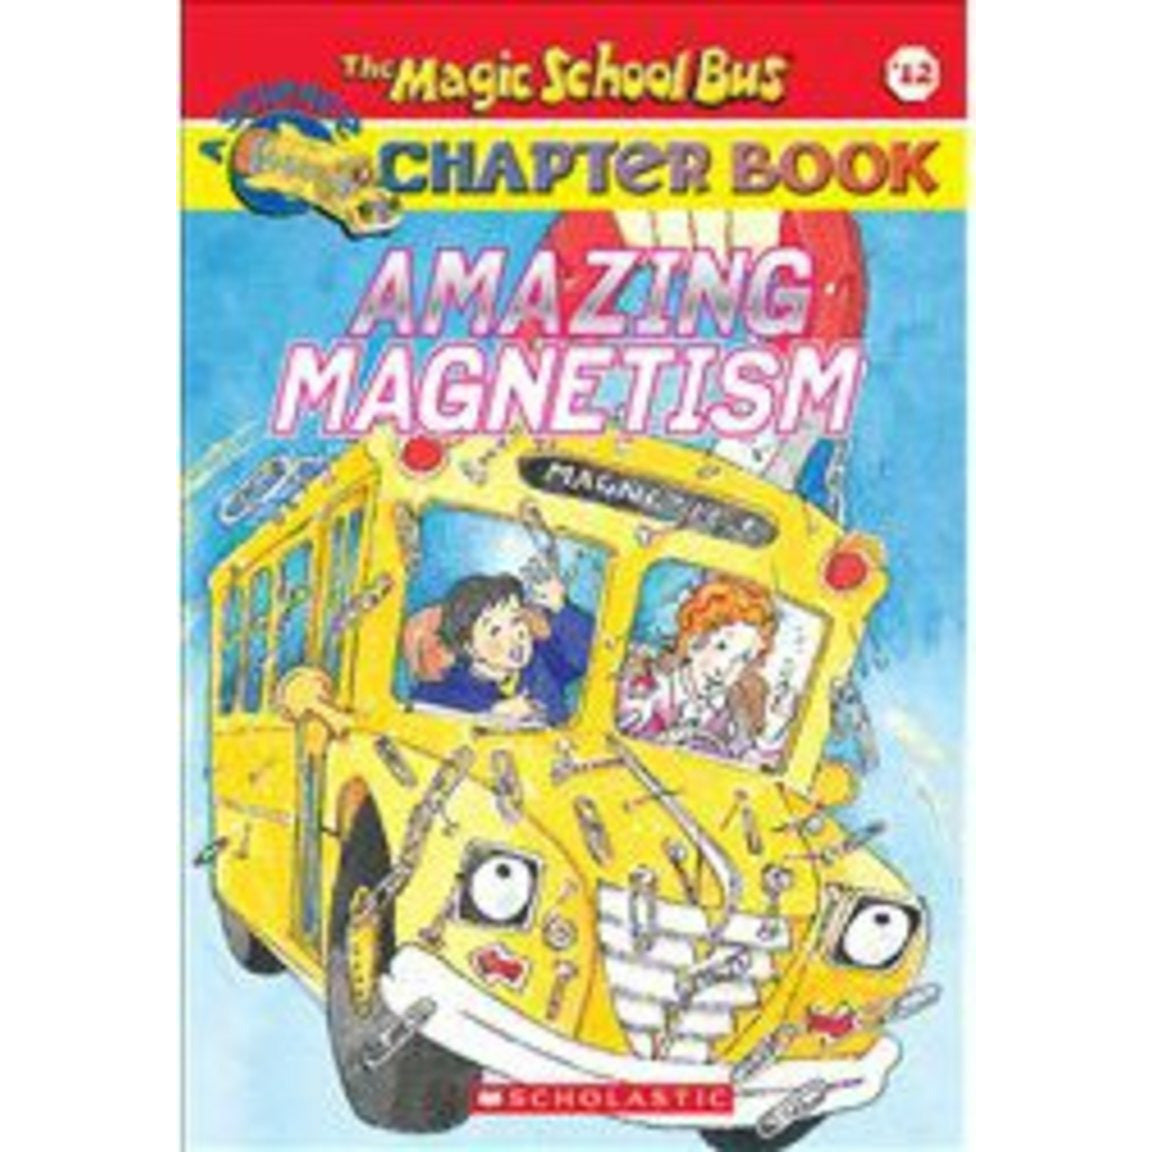 The Magic School Bus: Amazing Magnetism #12